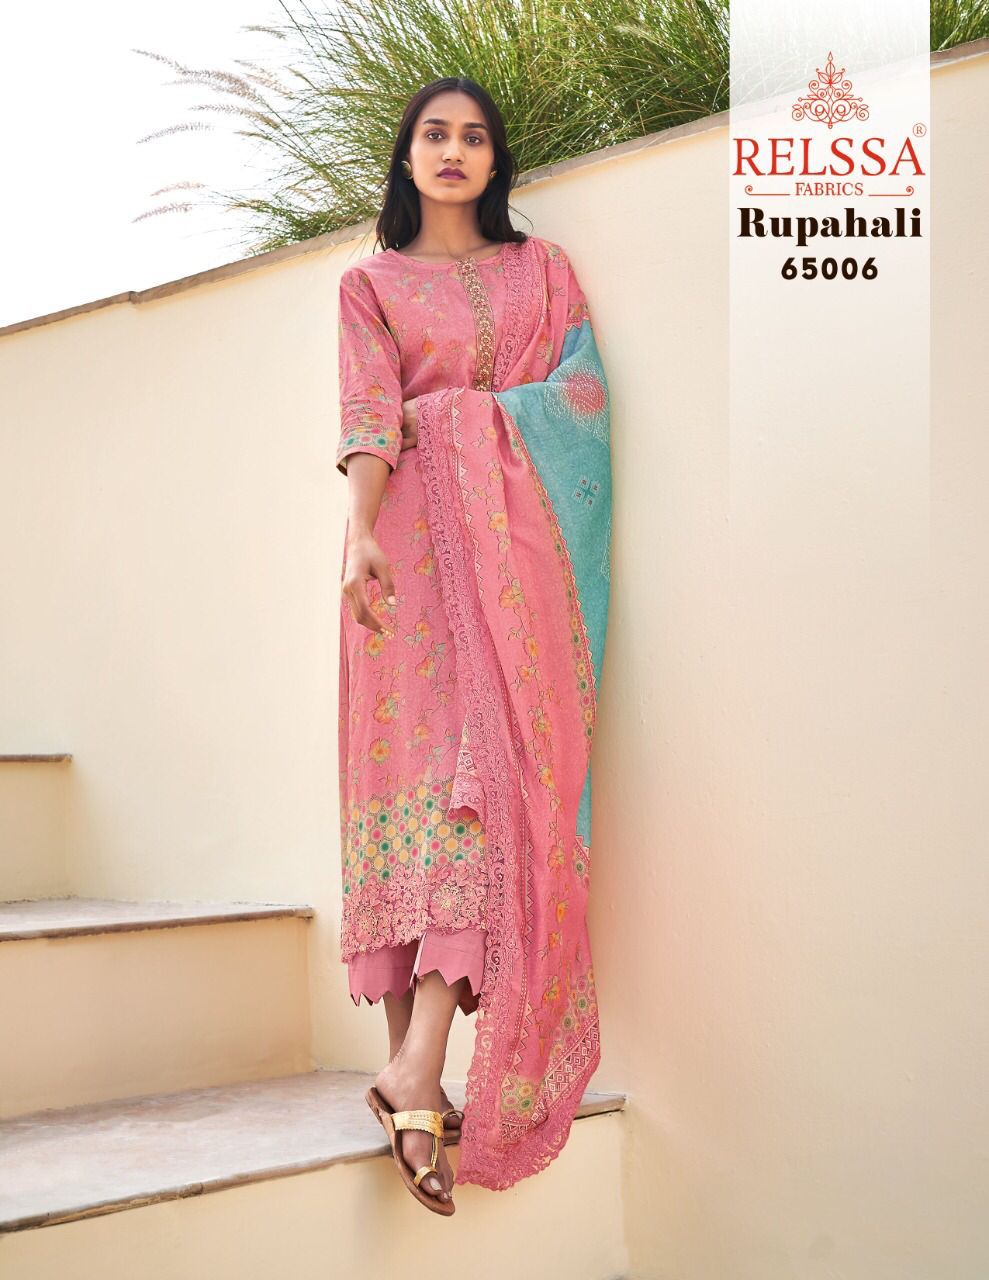 Relssa Fabrics Rupahali 65006